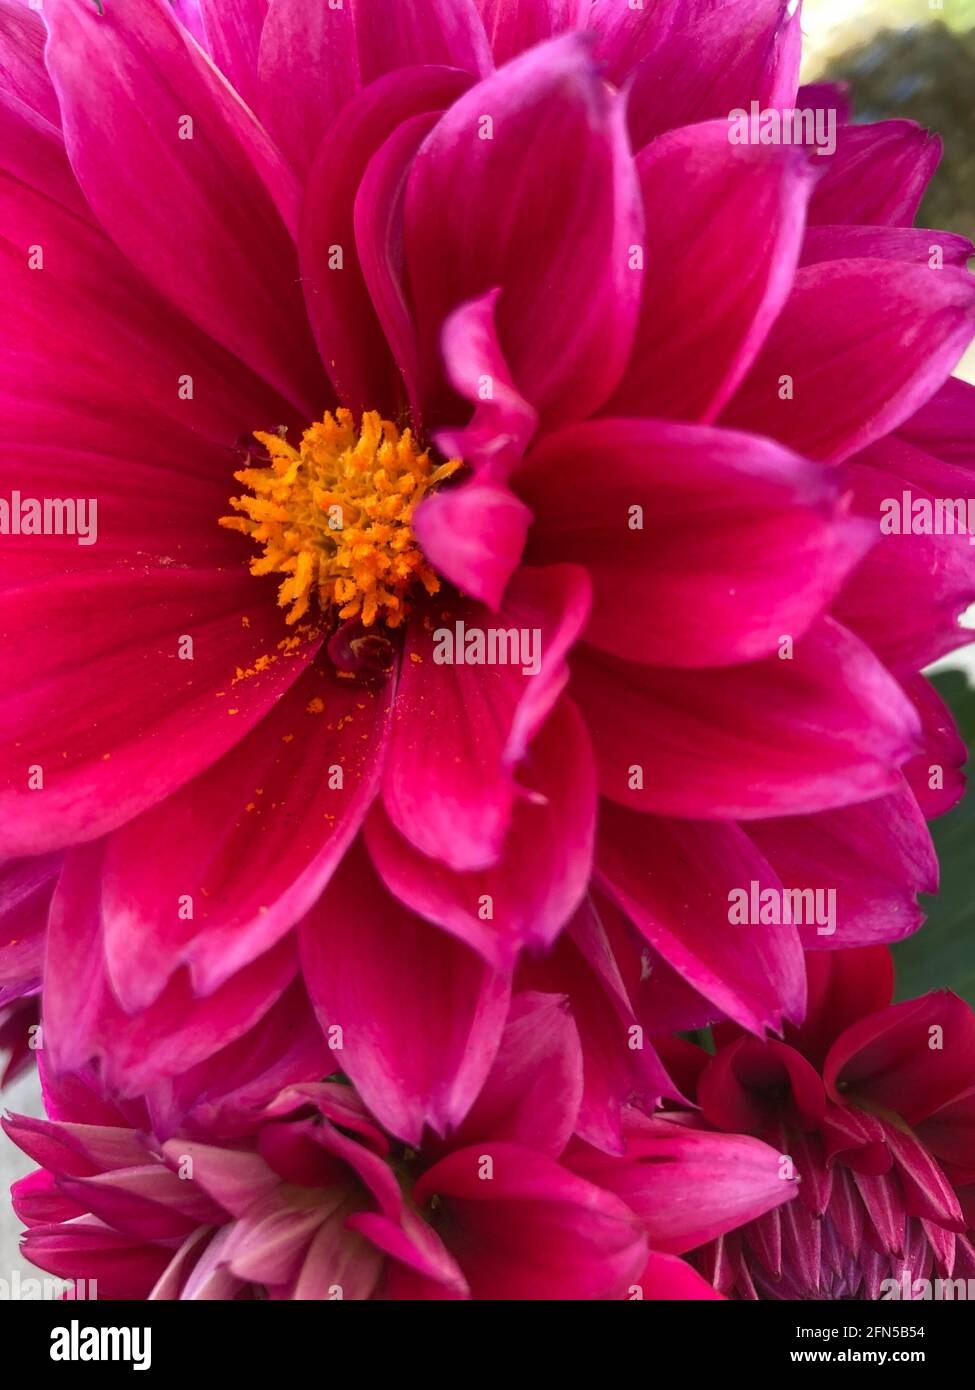 dark pink dahlia flowers close up shot Stock Photo